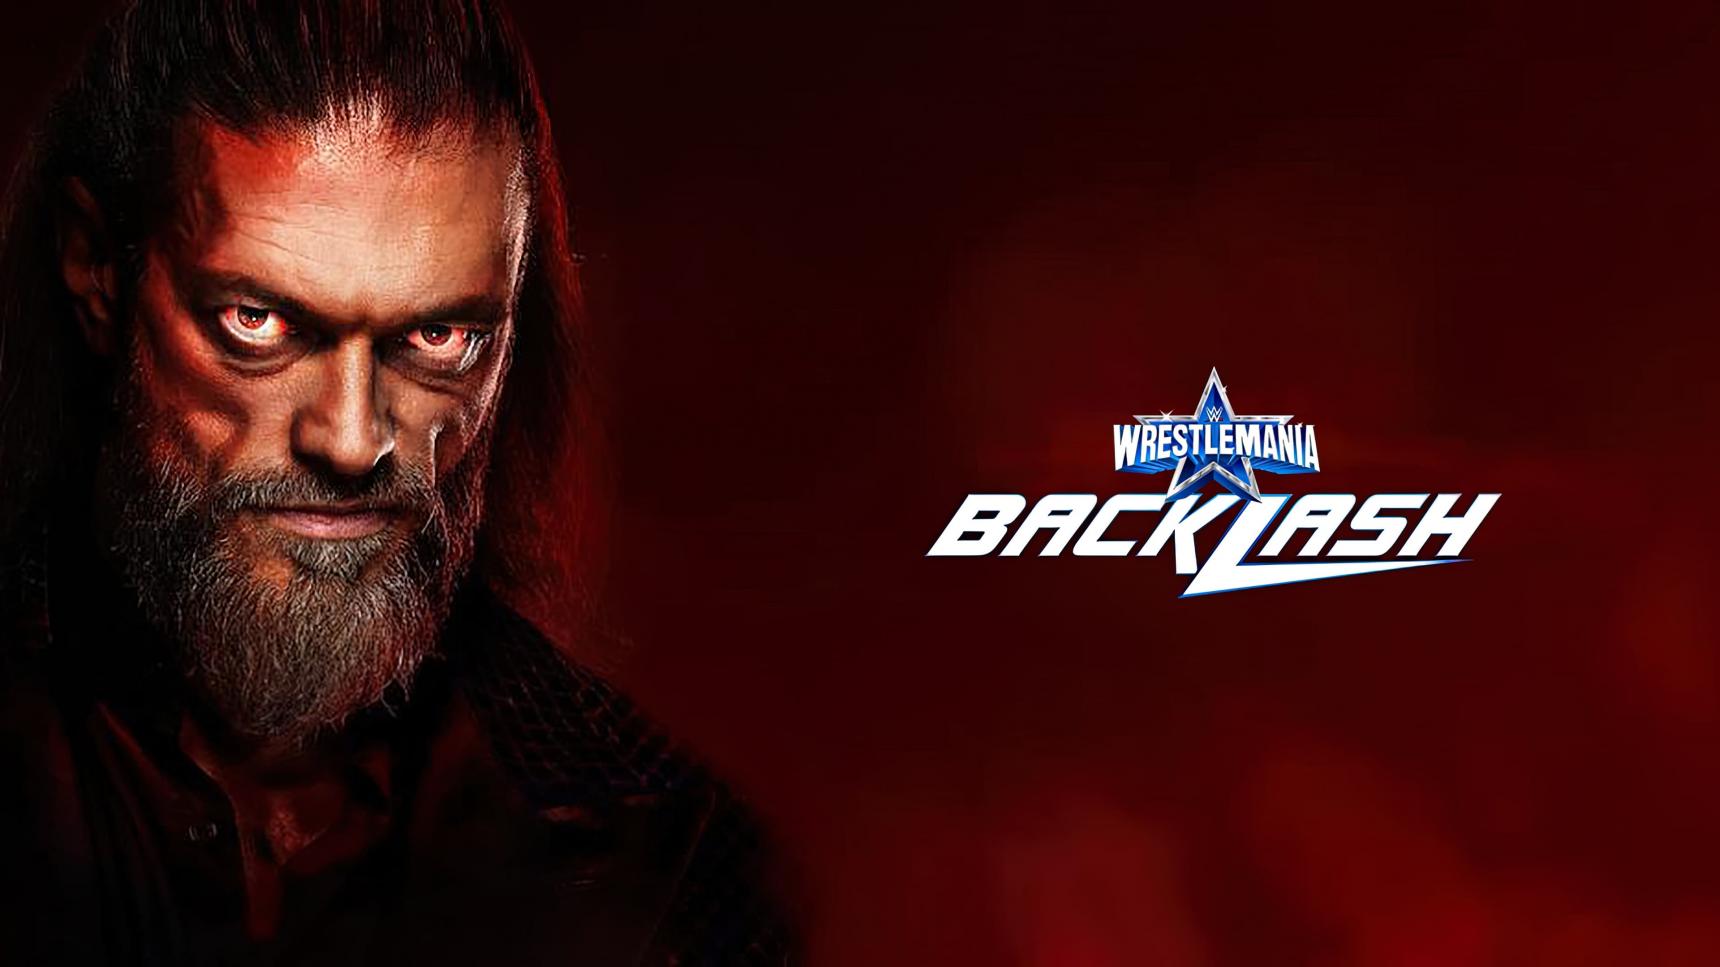 poster de WWE WrestleMania Backlash 2022